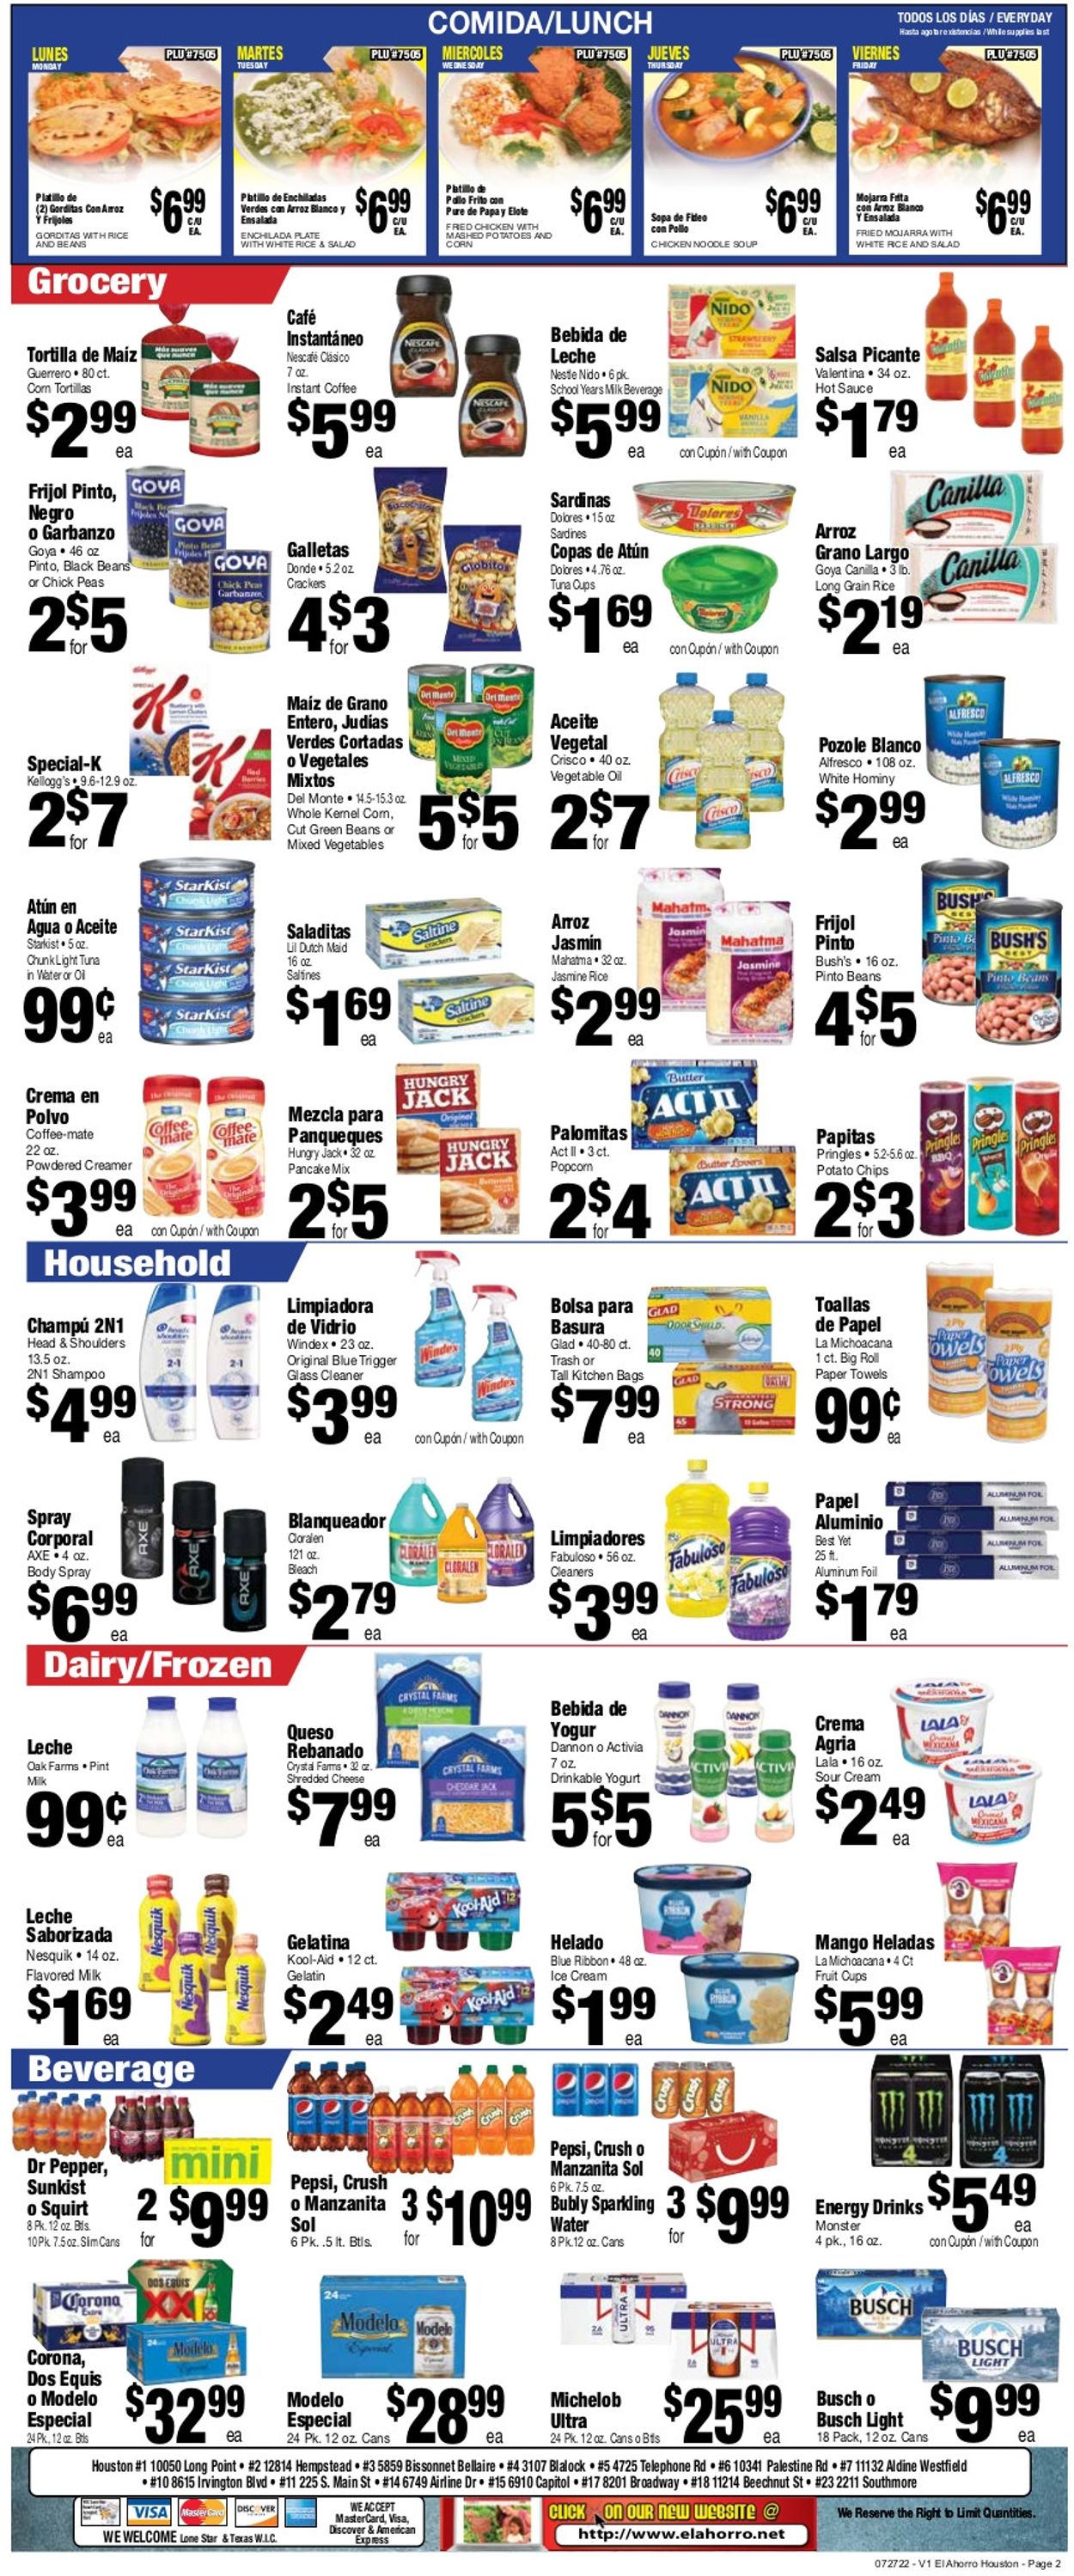 Catalogue El Ahorro Supermarket from 07/27/2022